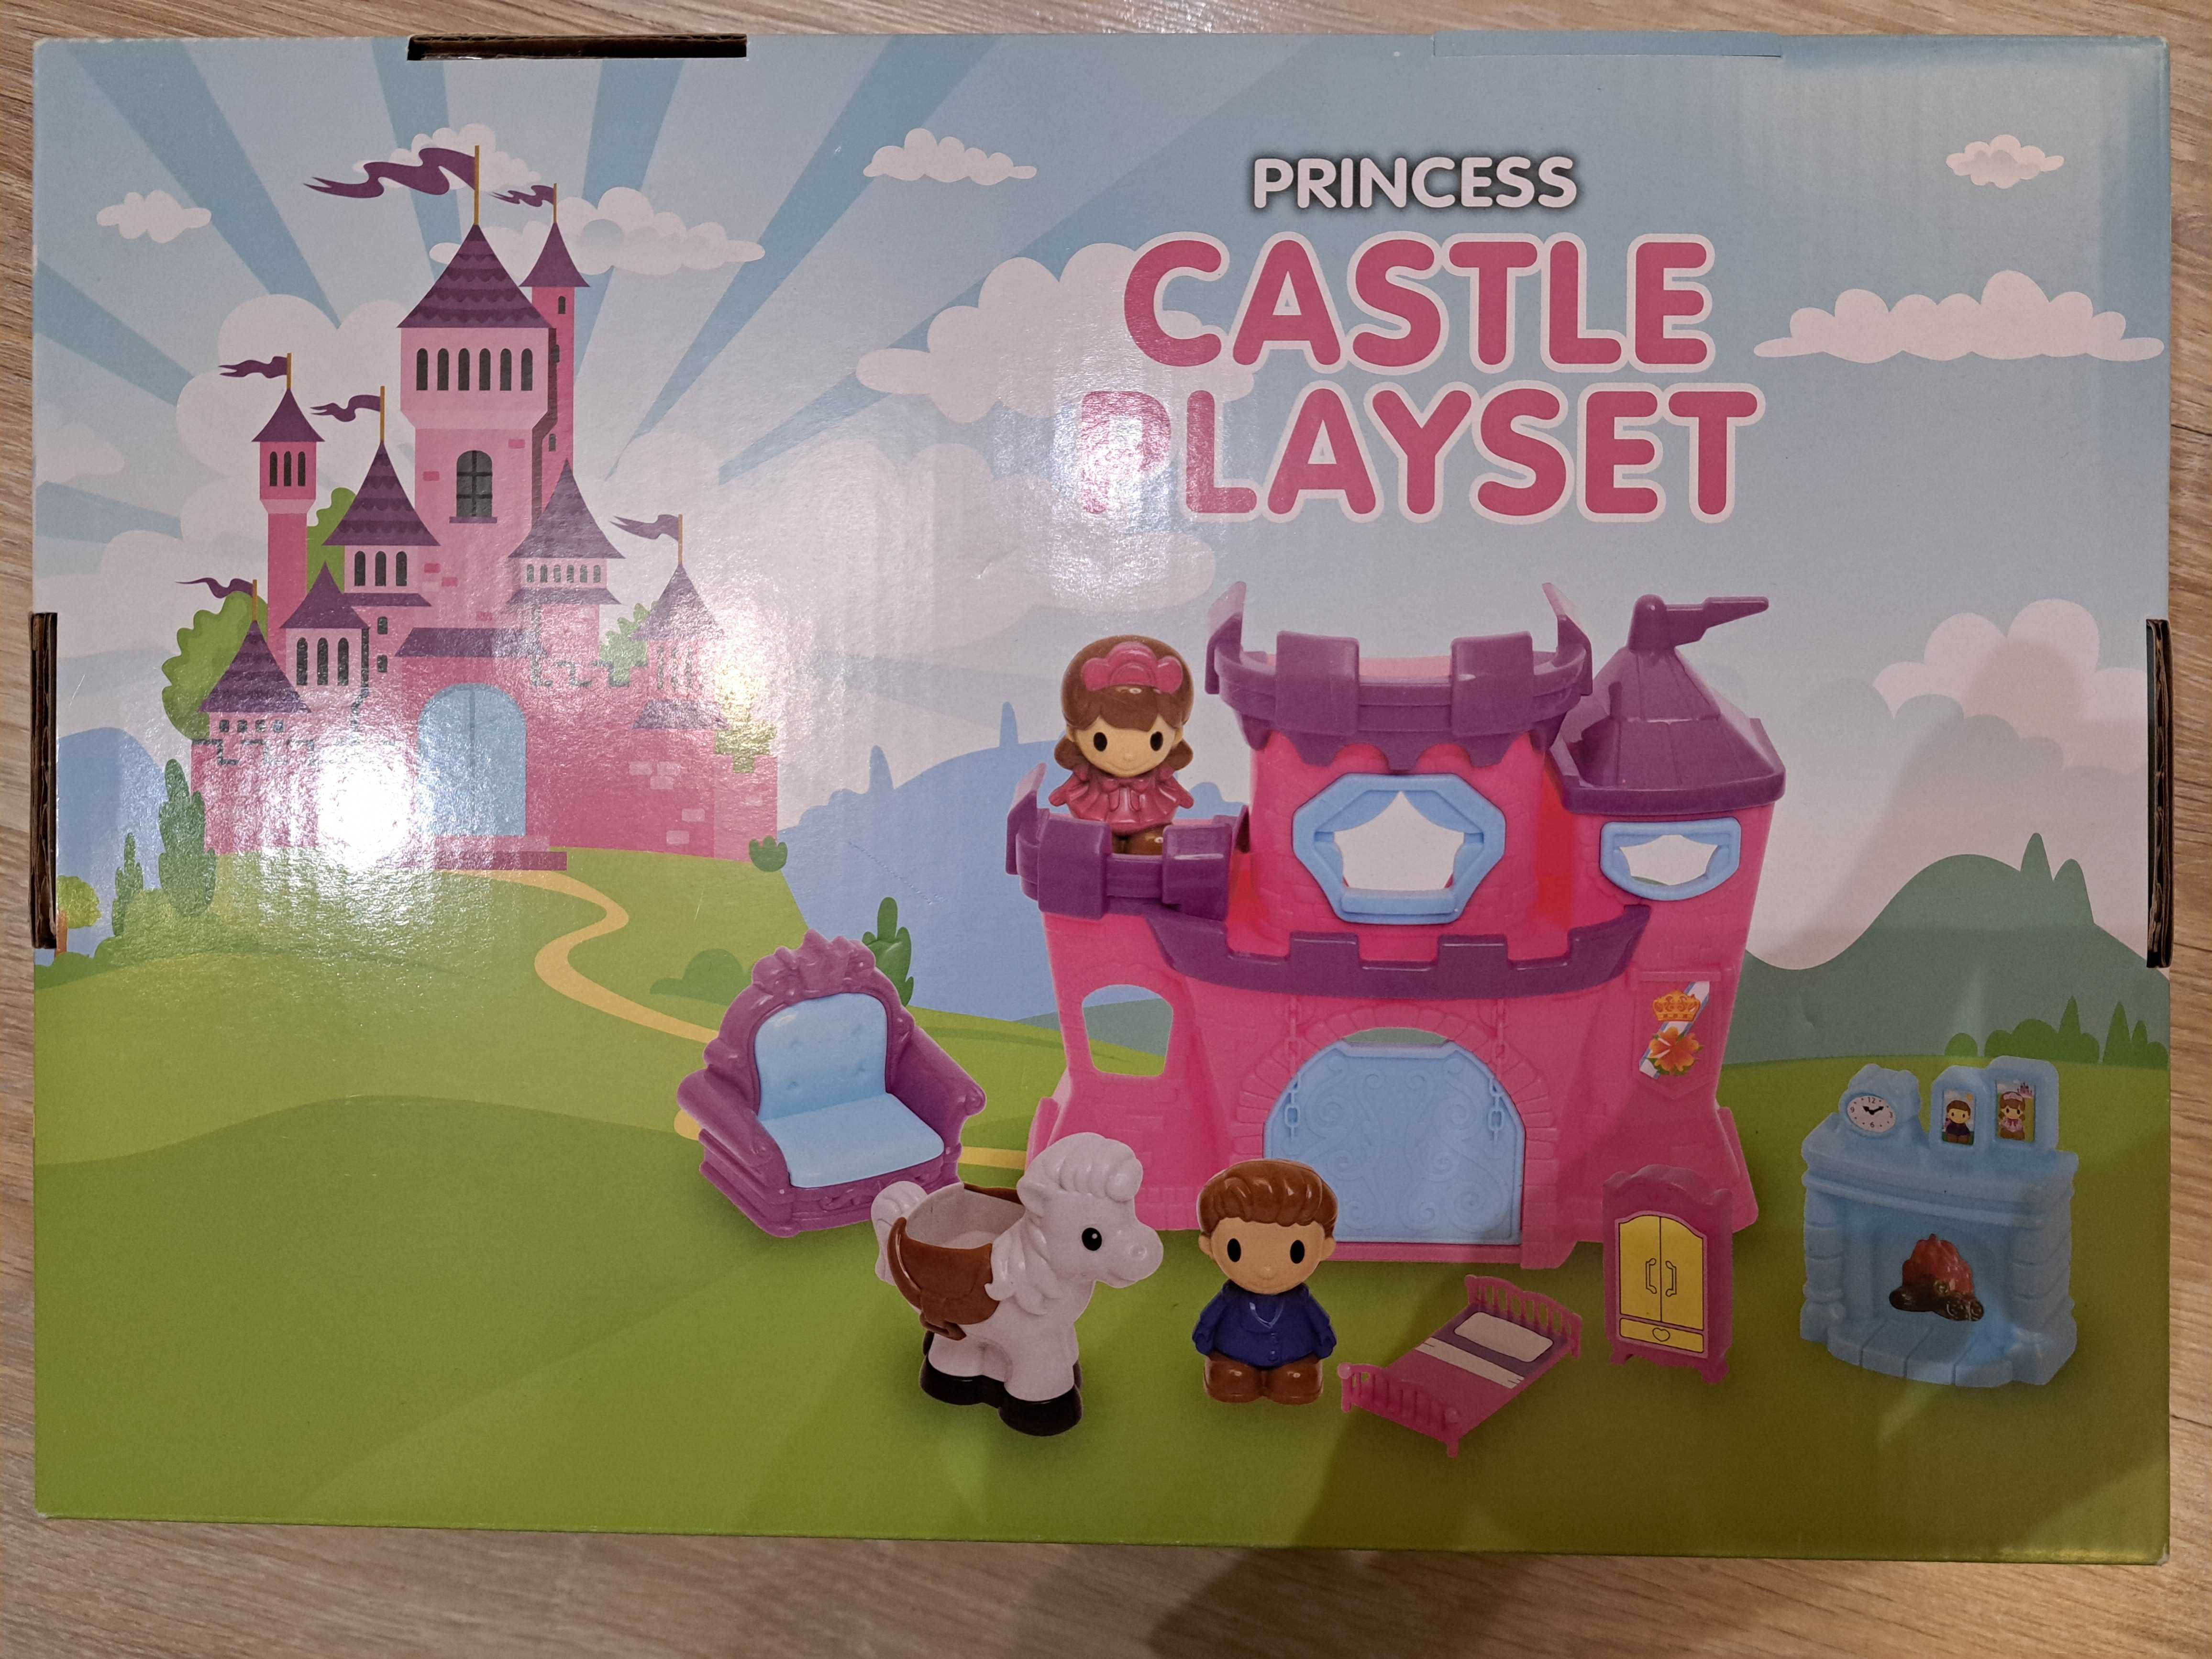 Zabawka Princess Castle Playset (zamek, księżniczka, rycerz) i lalka